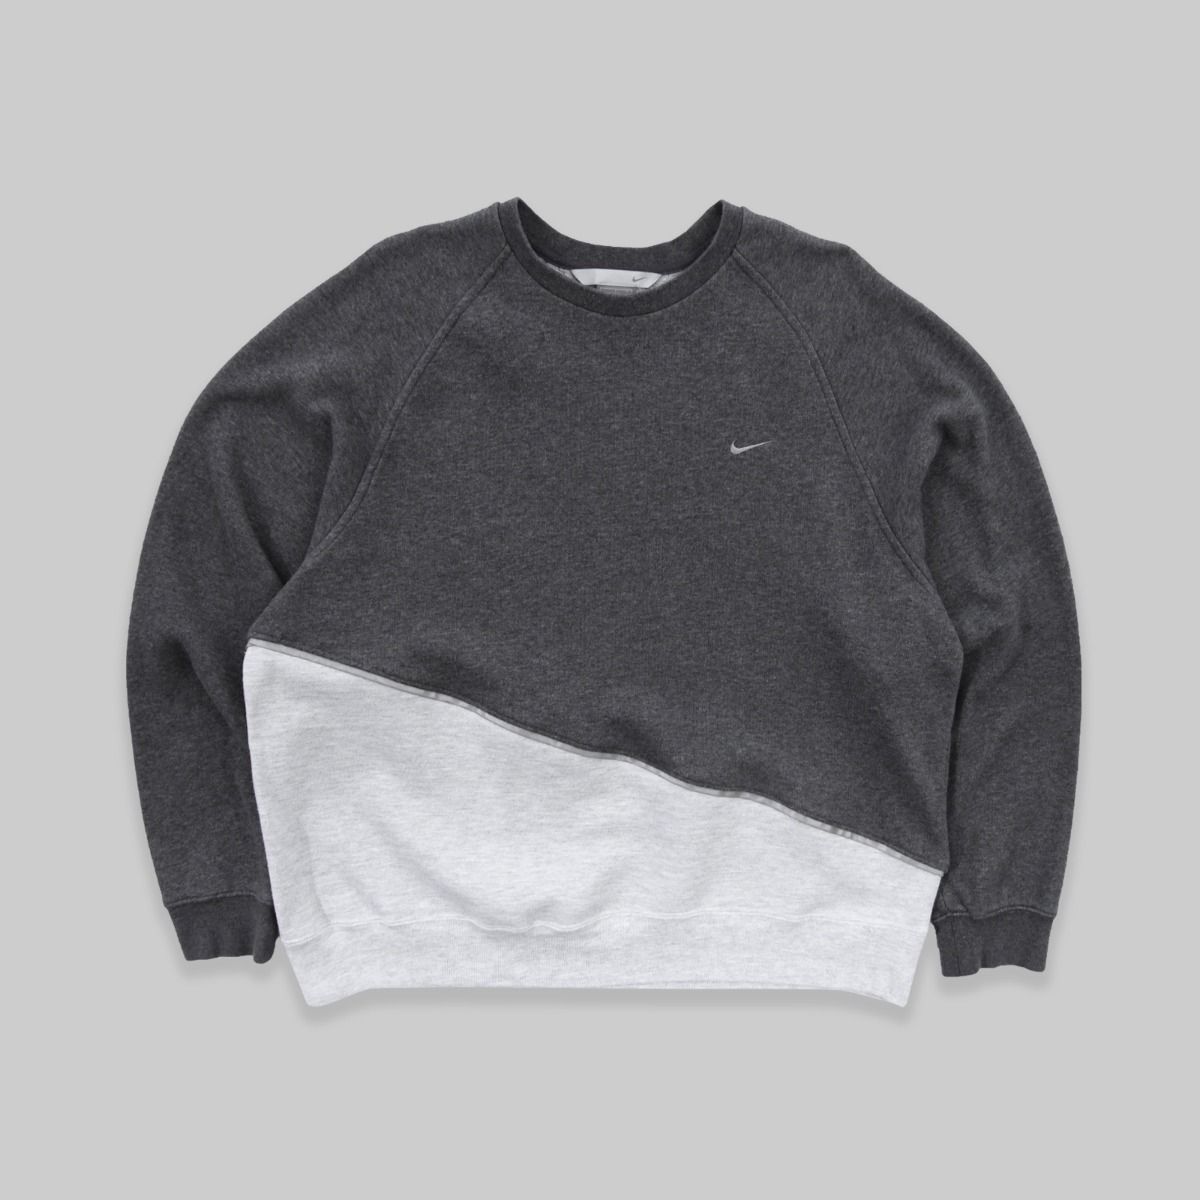 Nike REWORKED Grey Sweatshirt